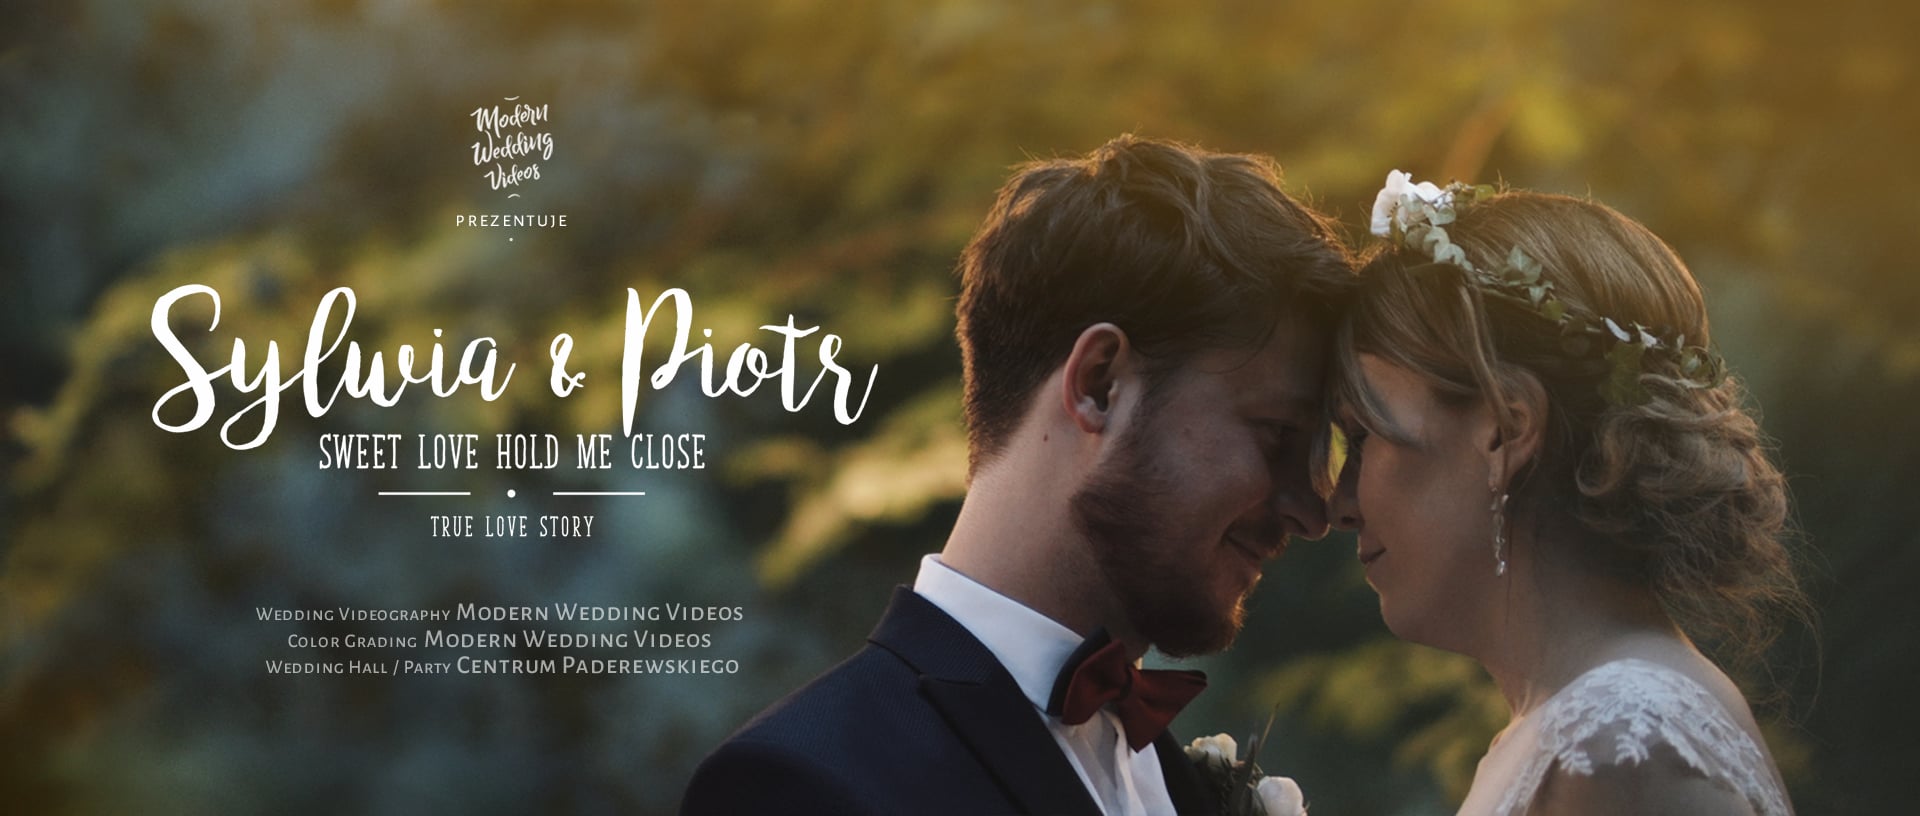 Modern Wedding Videos - Film i teledysk ślubny